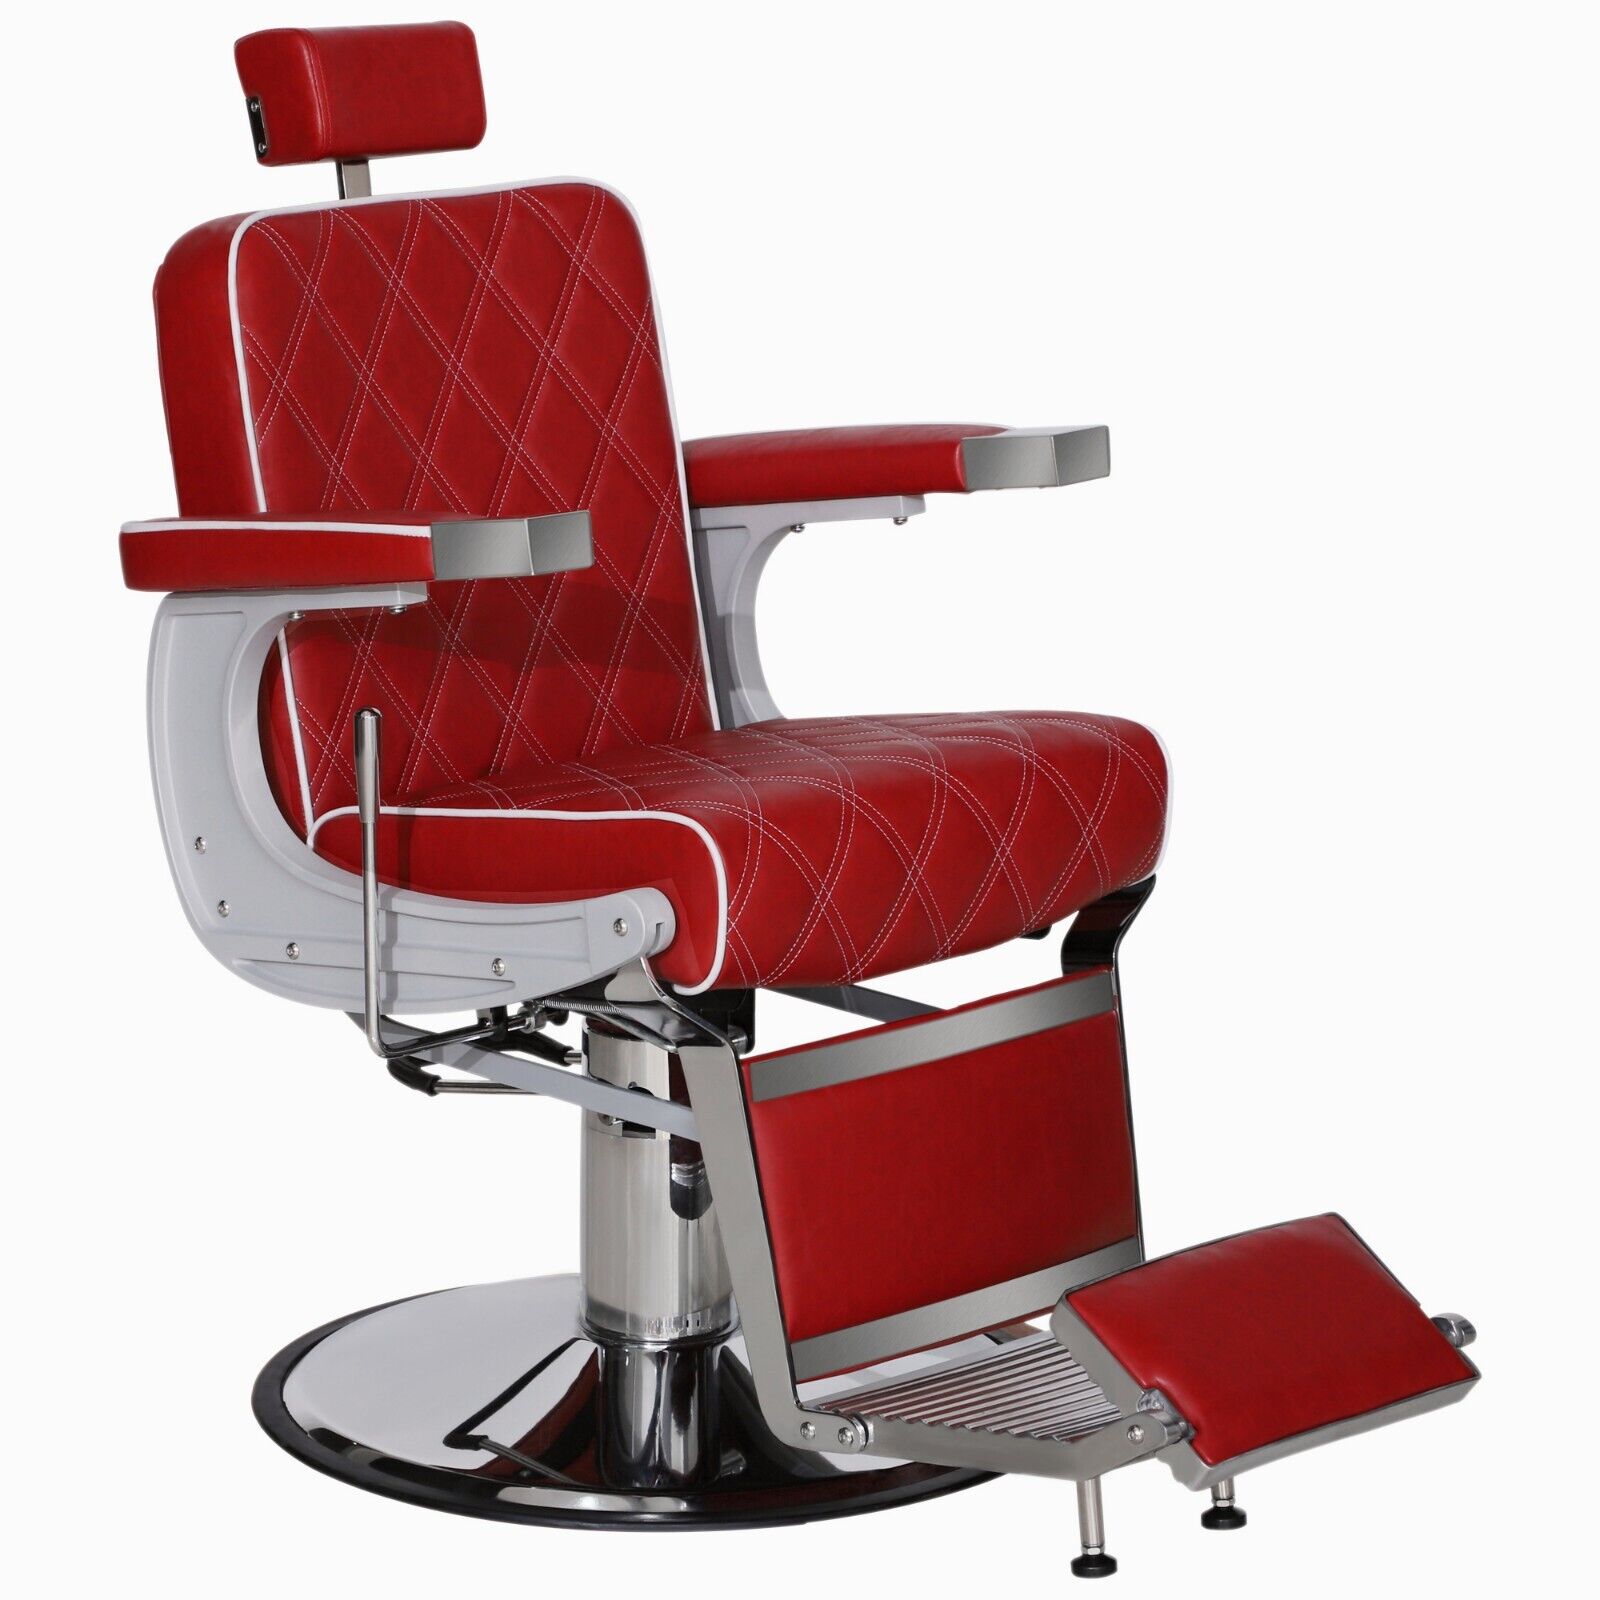 BarberPub Vintage Barber Chair Hydraulic Recline Salon Spa Styling Equipment3825